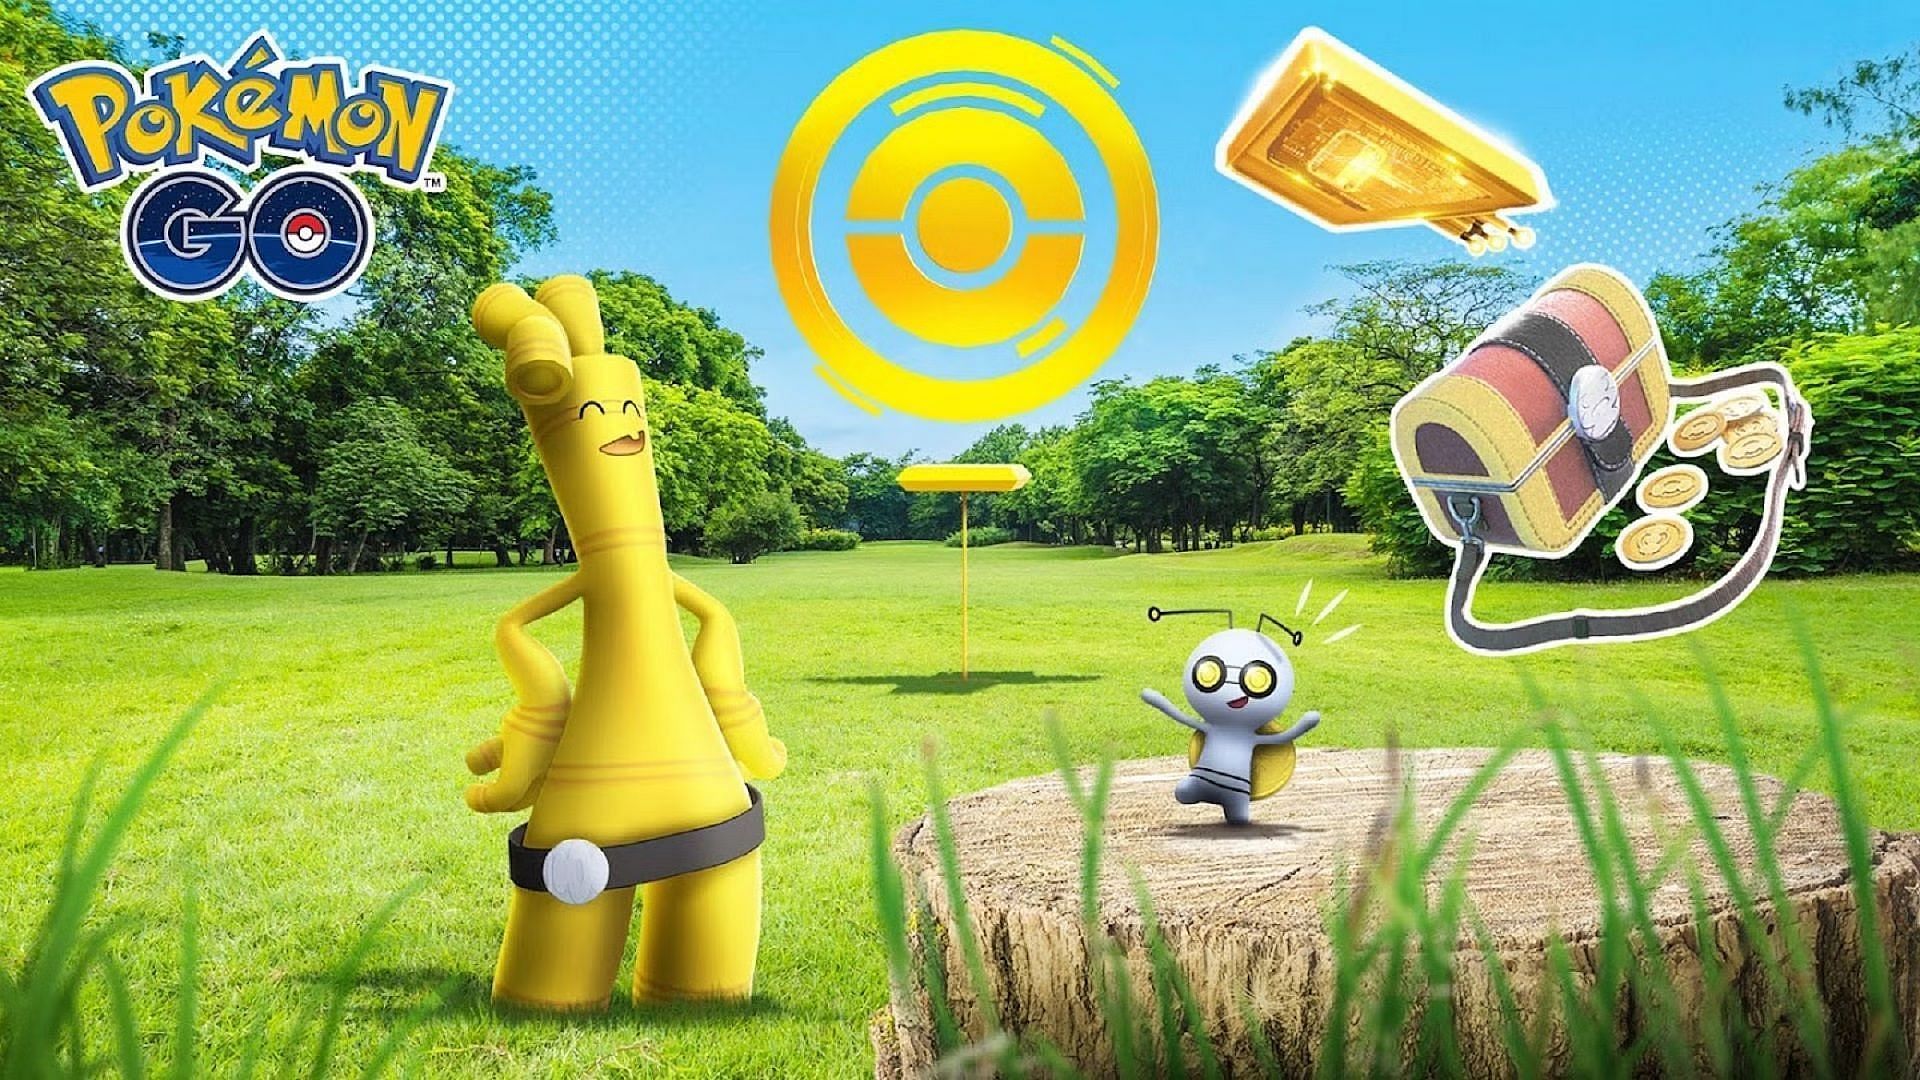 Pokemon GO: What are Gold PokeStops